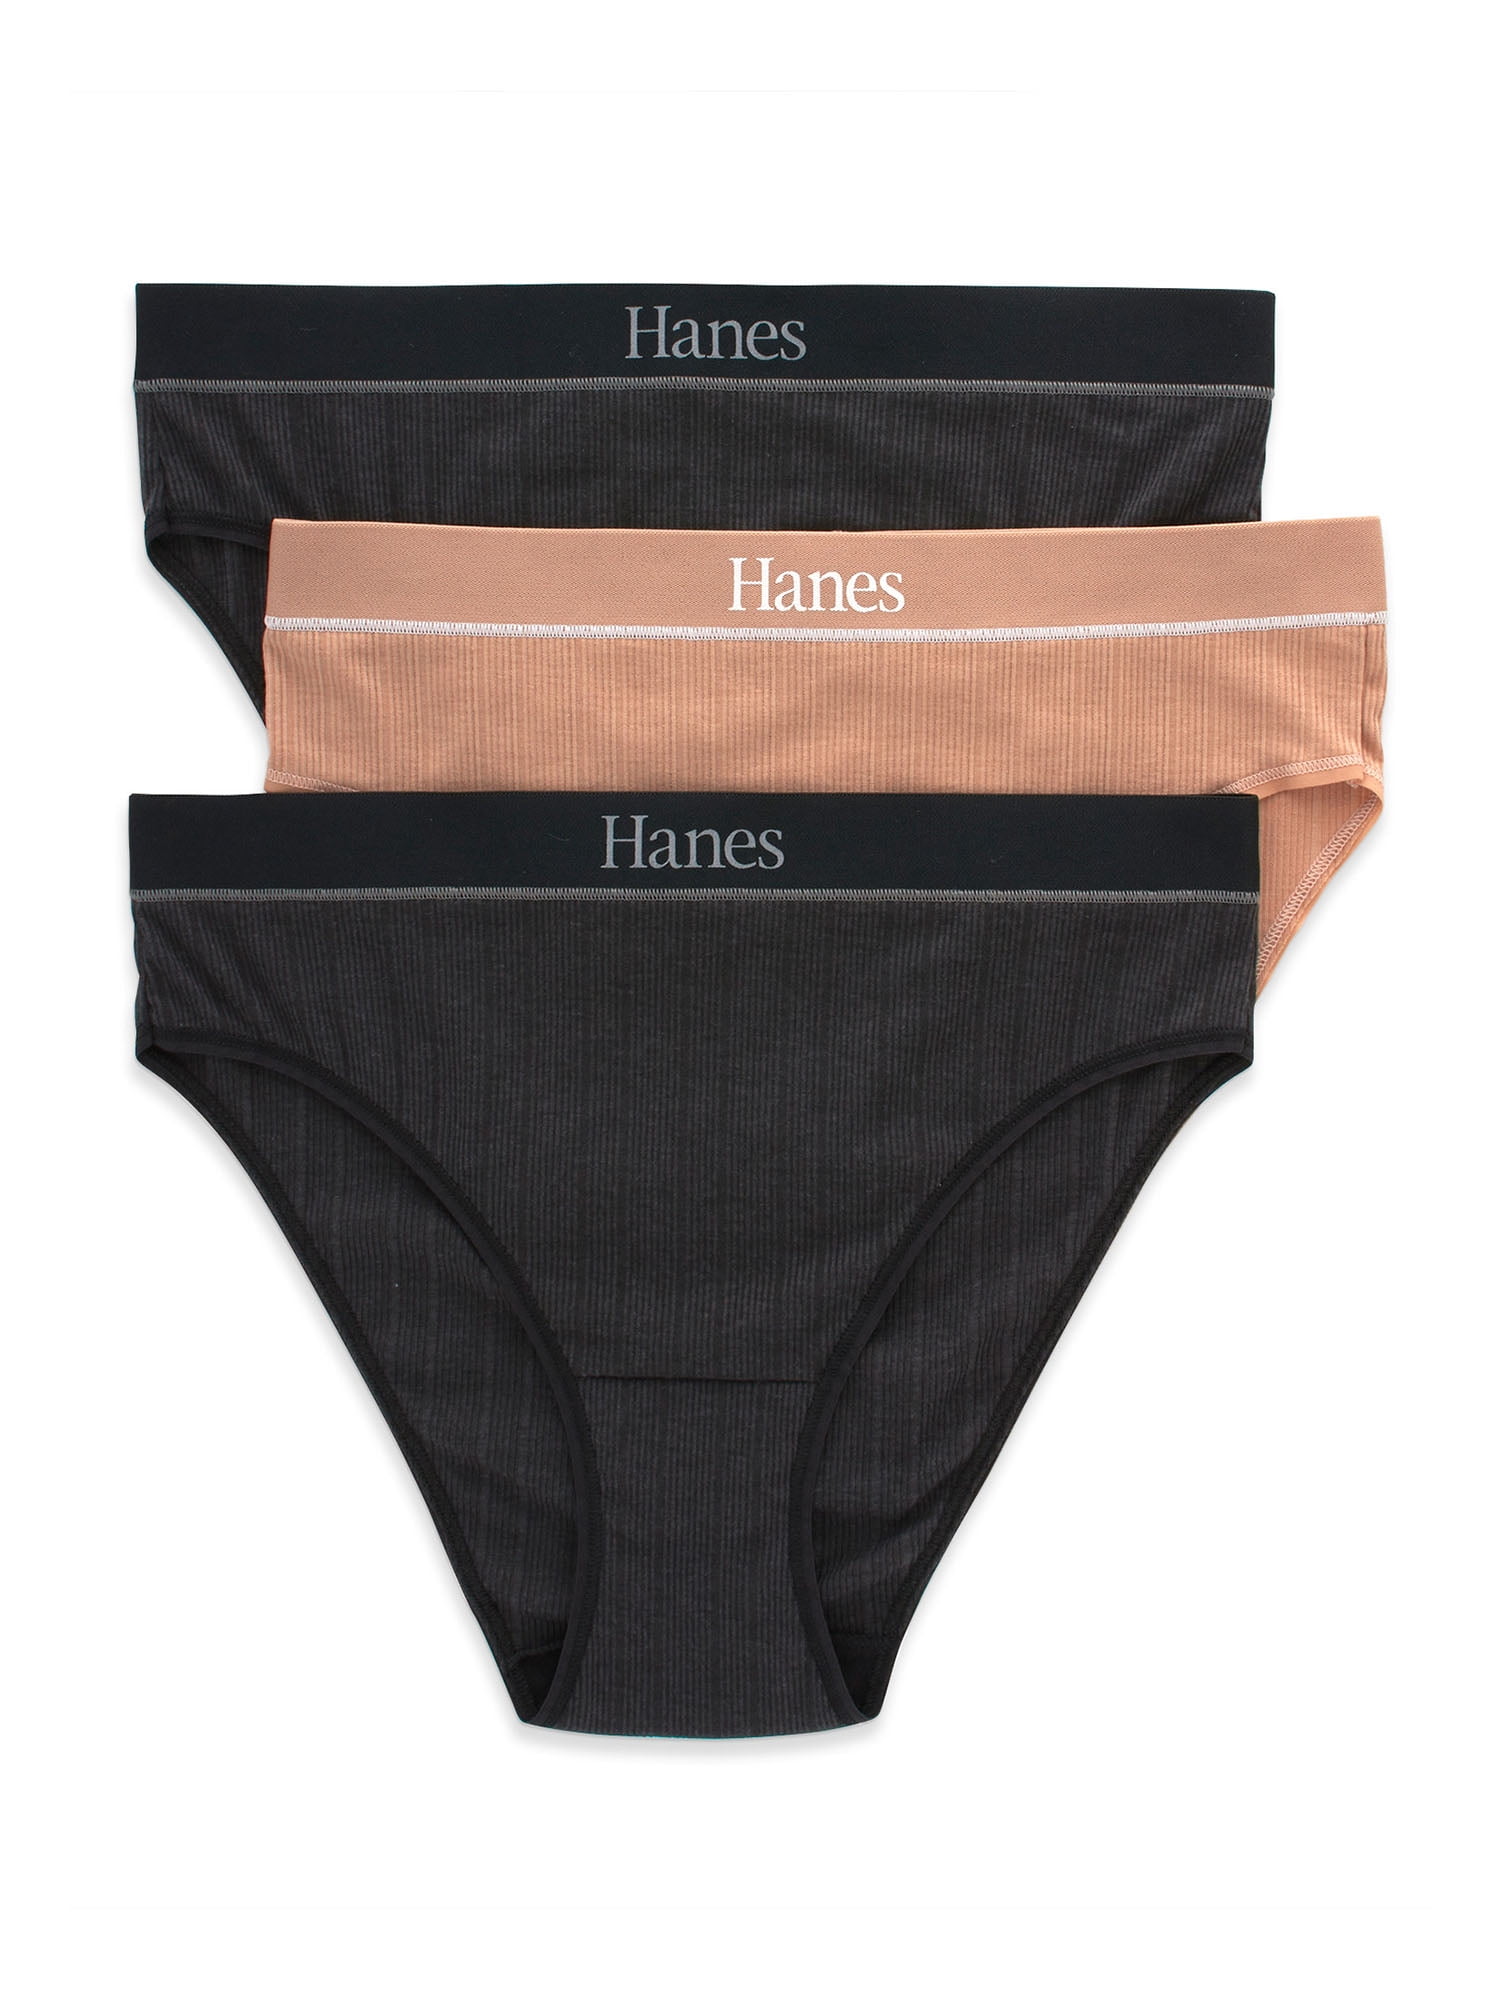 Buy Hanes Women's Cotton Hi Cut Underwear 3-Pack (Colors May Vary